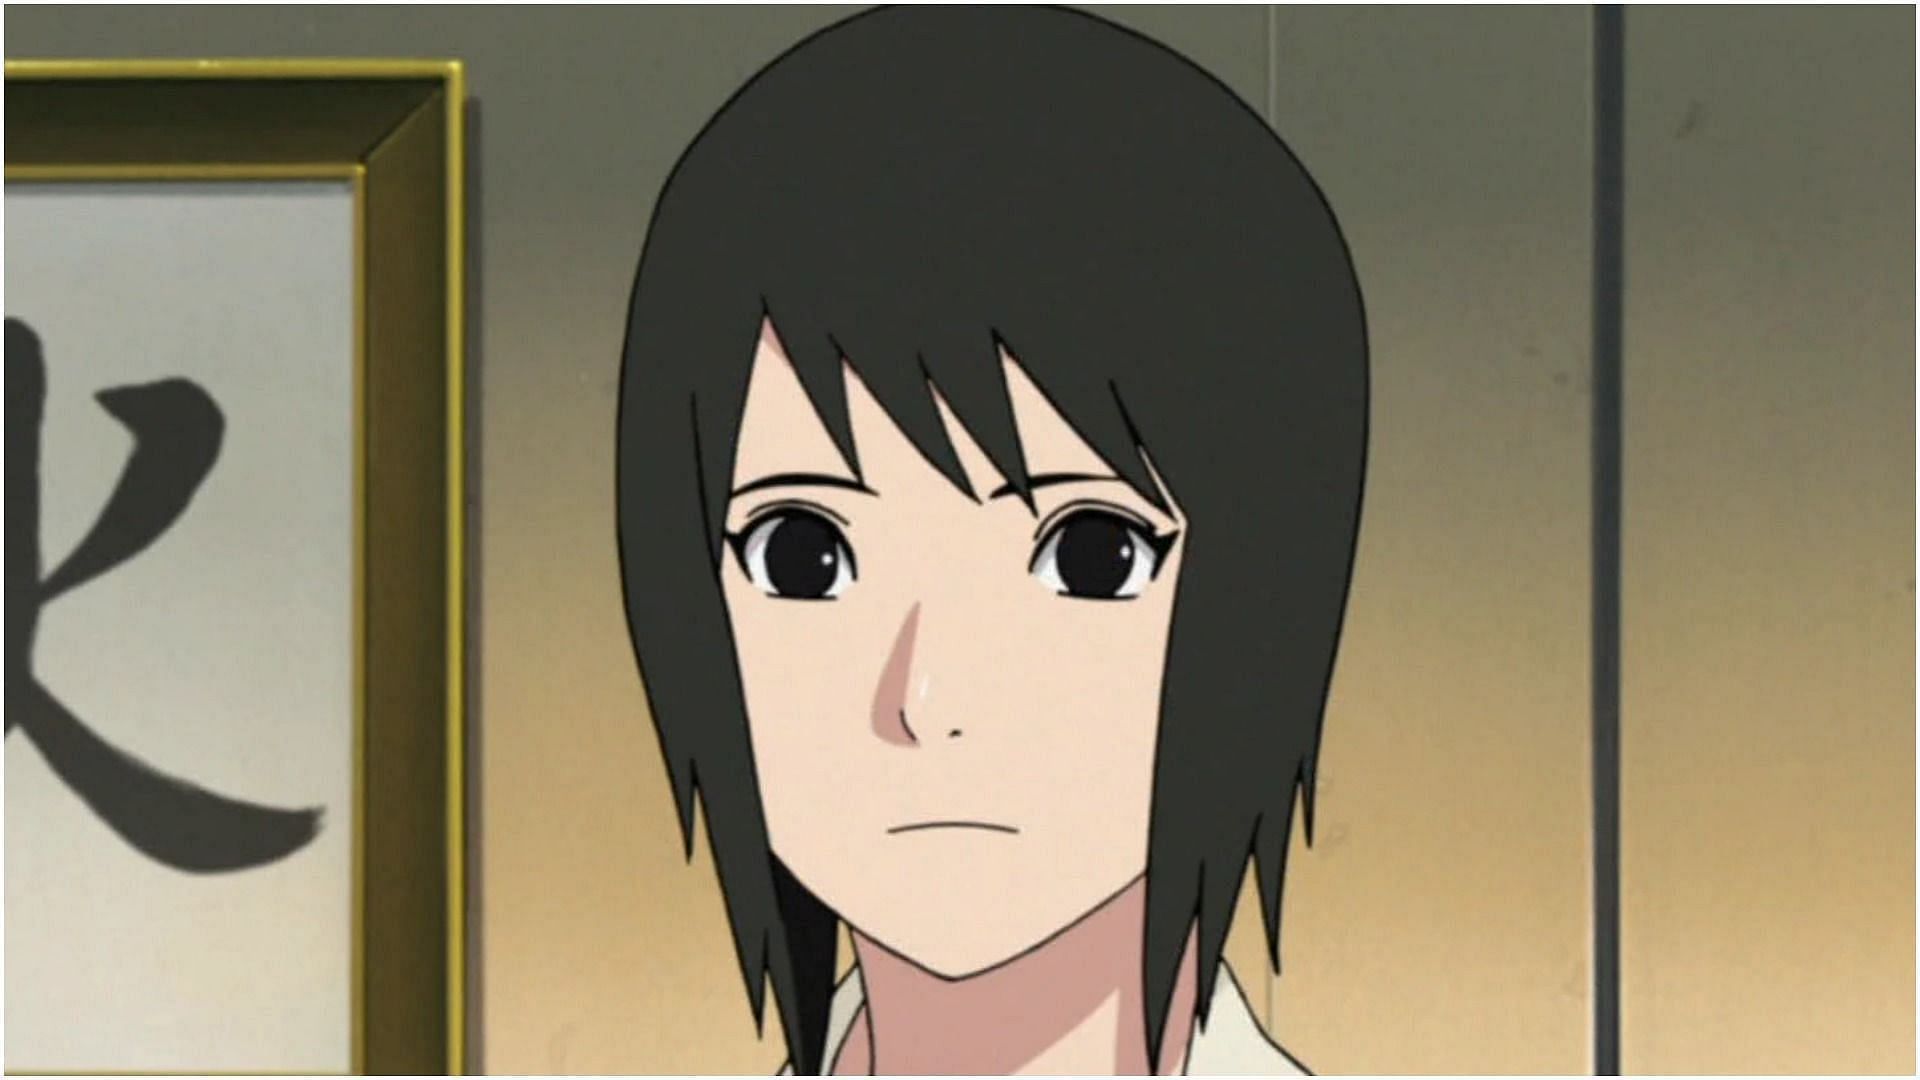 Shizune as seen in Naruto (Image via Studio Pierrot)